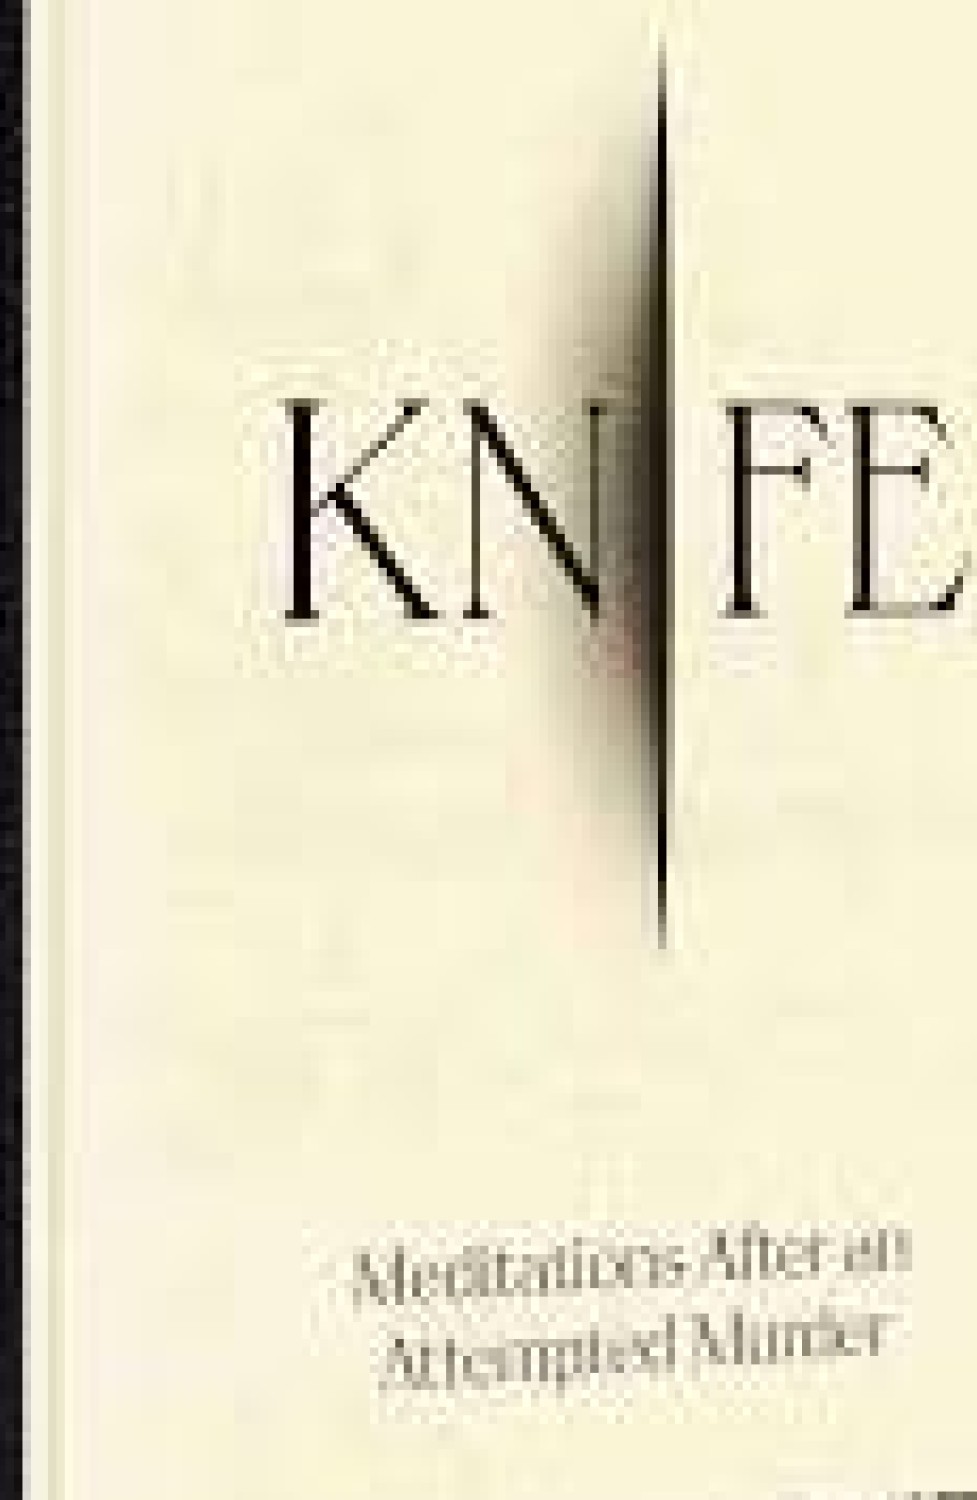 KNIFE : MEDITATIONS AFTER AN ATTEMPTED MURDER